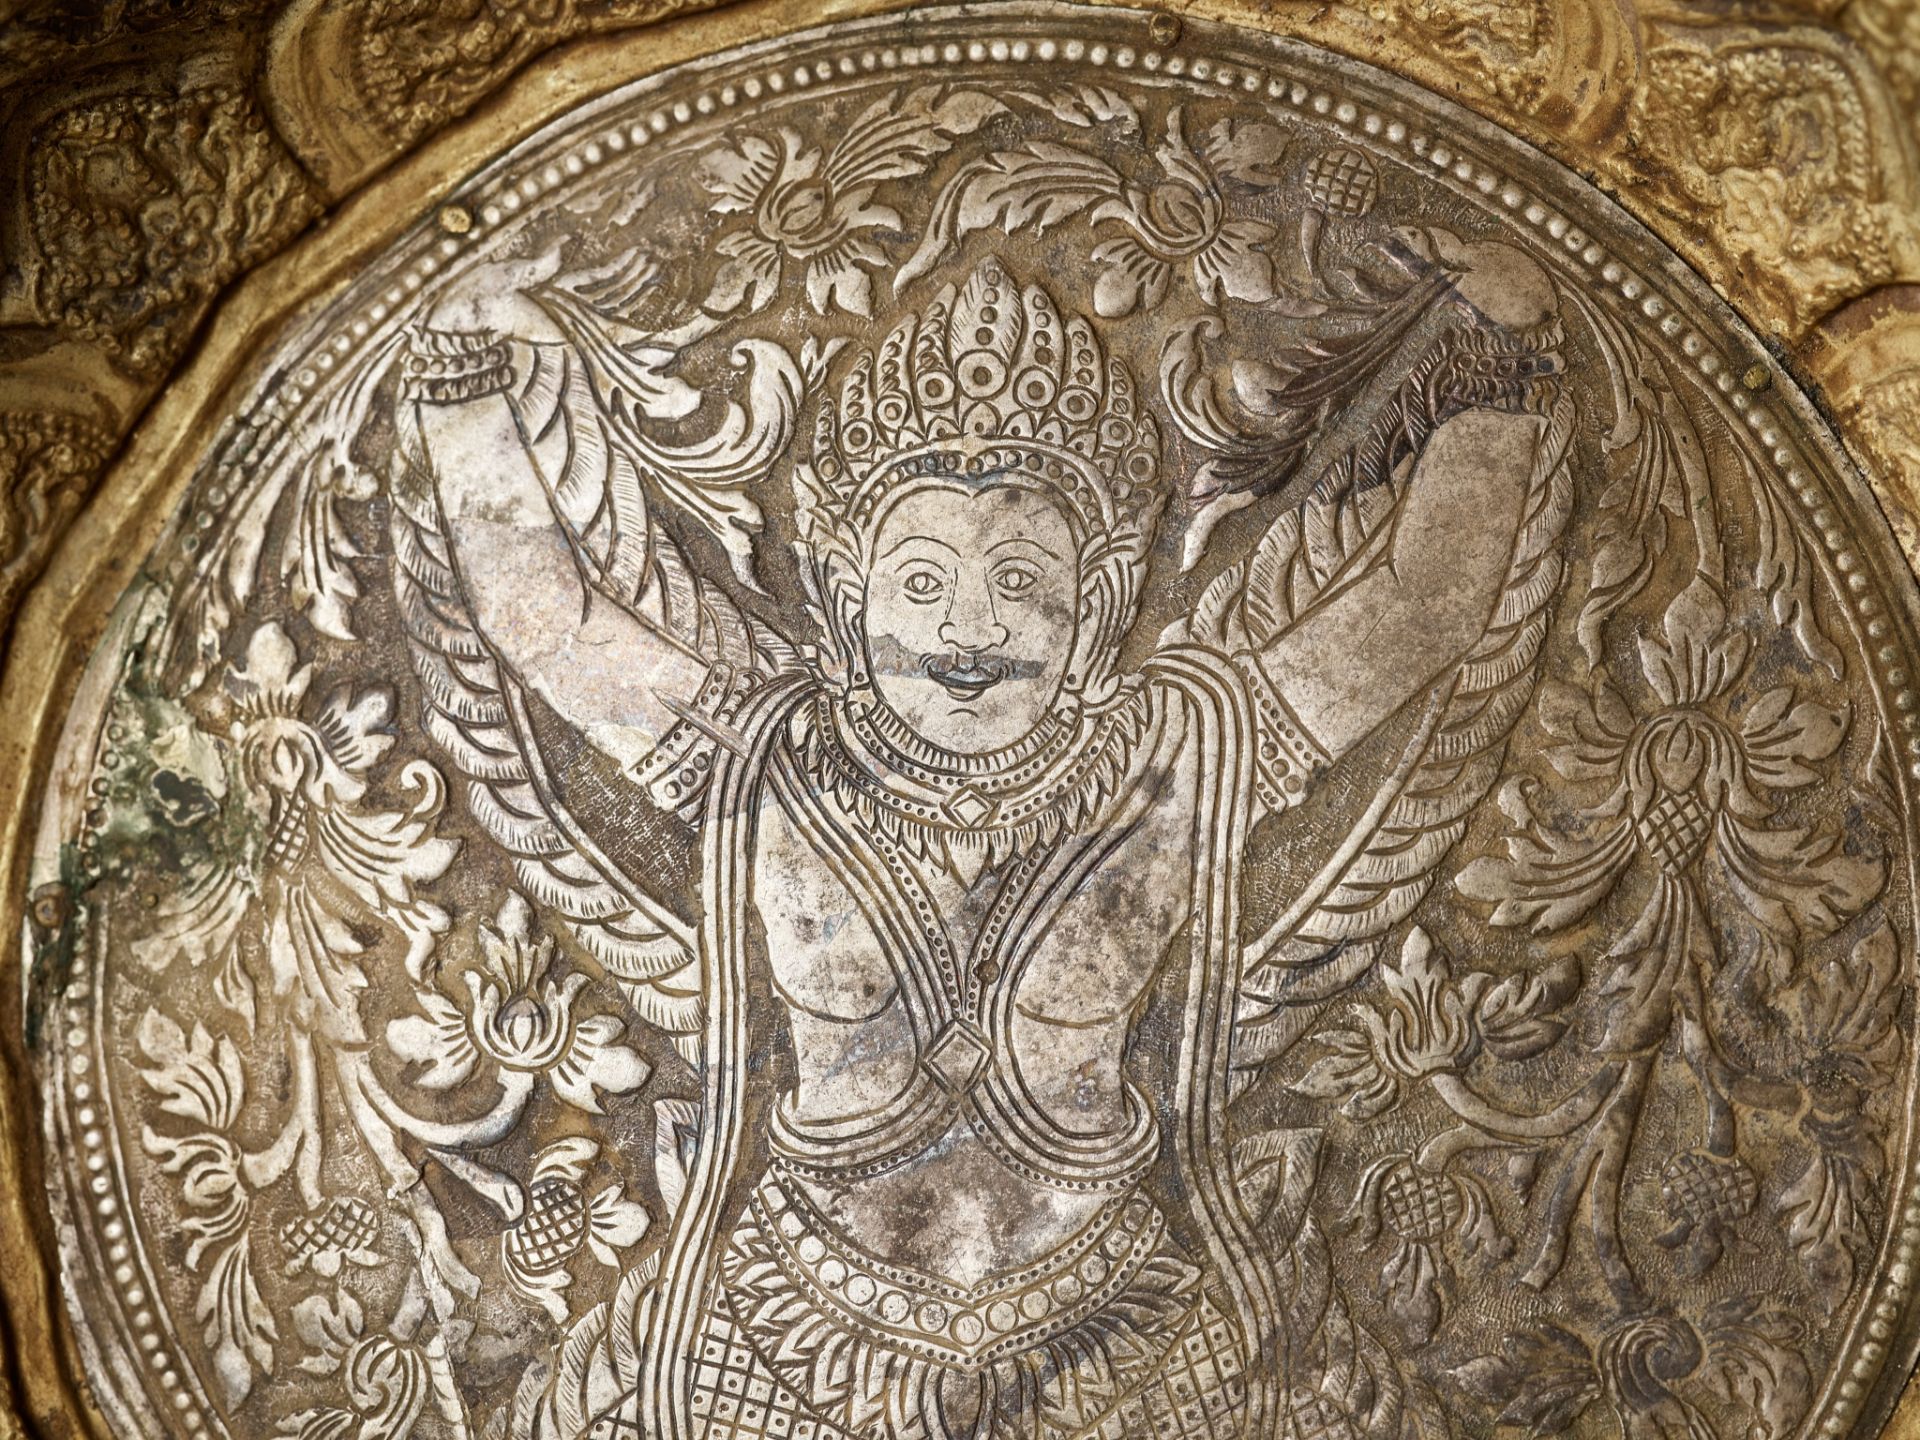 A SILVER-INLAID GOLD REPOUSSÉ BOWL DEPICTING GARUDA, VIETNAM,FORMER KINGDOMS OF CHAMPA,CIRCA 10TH C. - Image 11 of 18